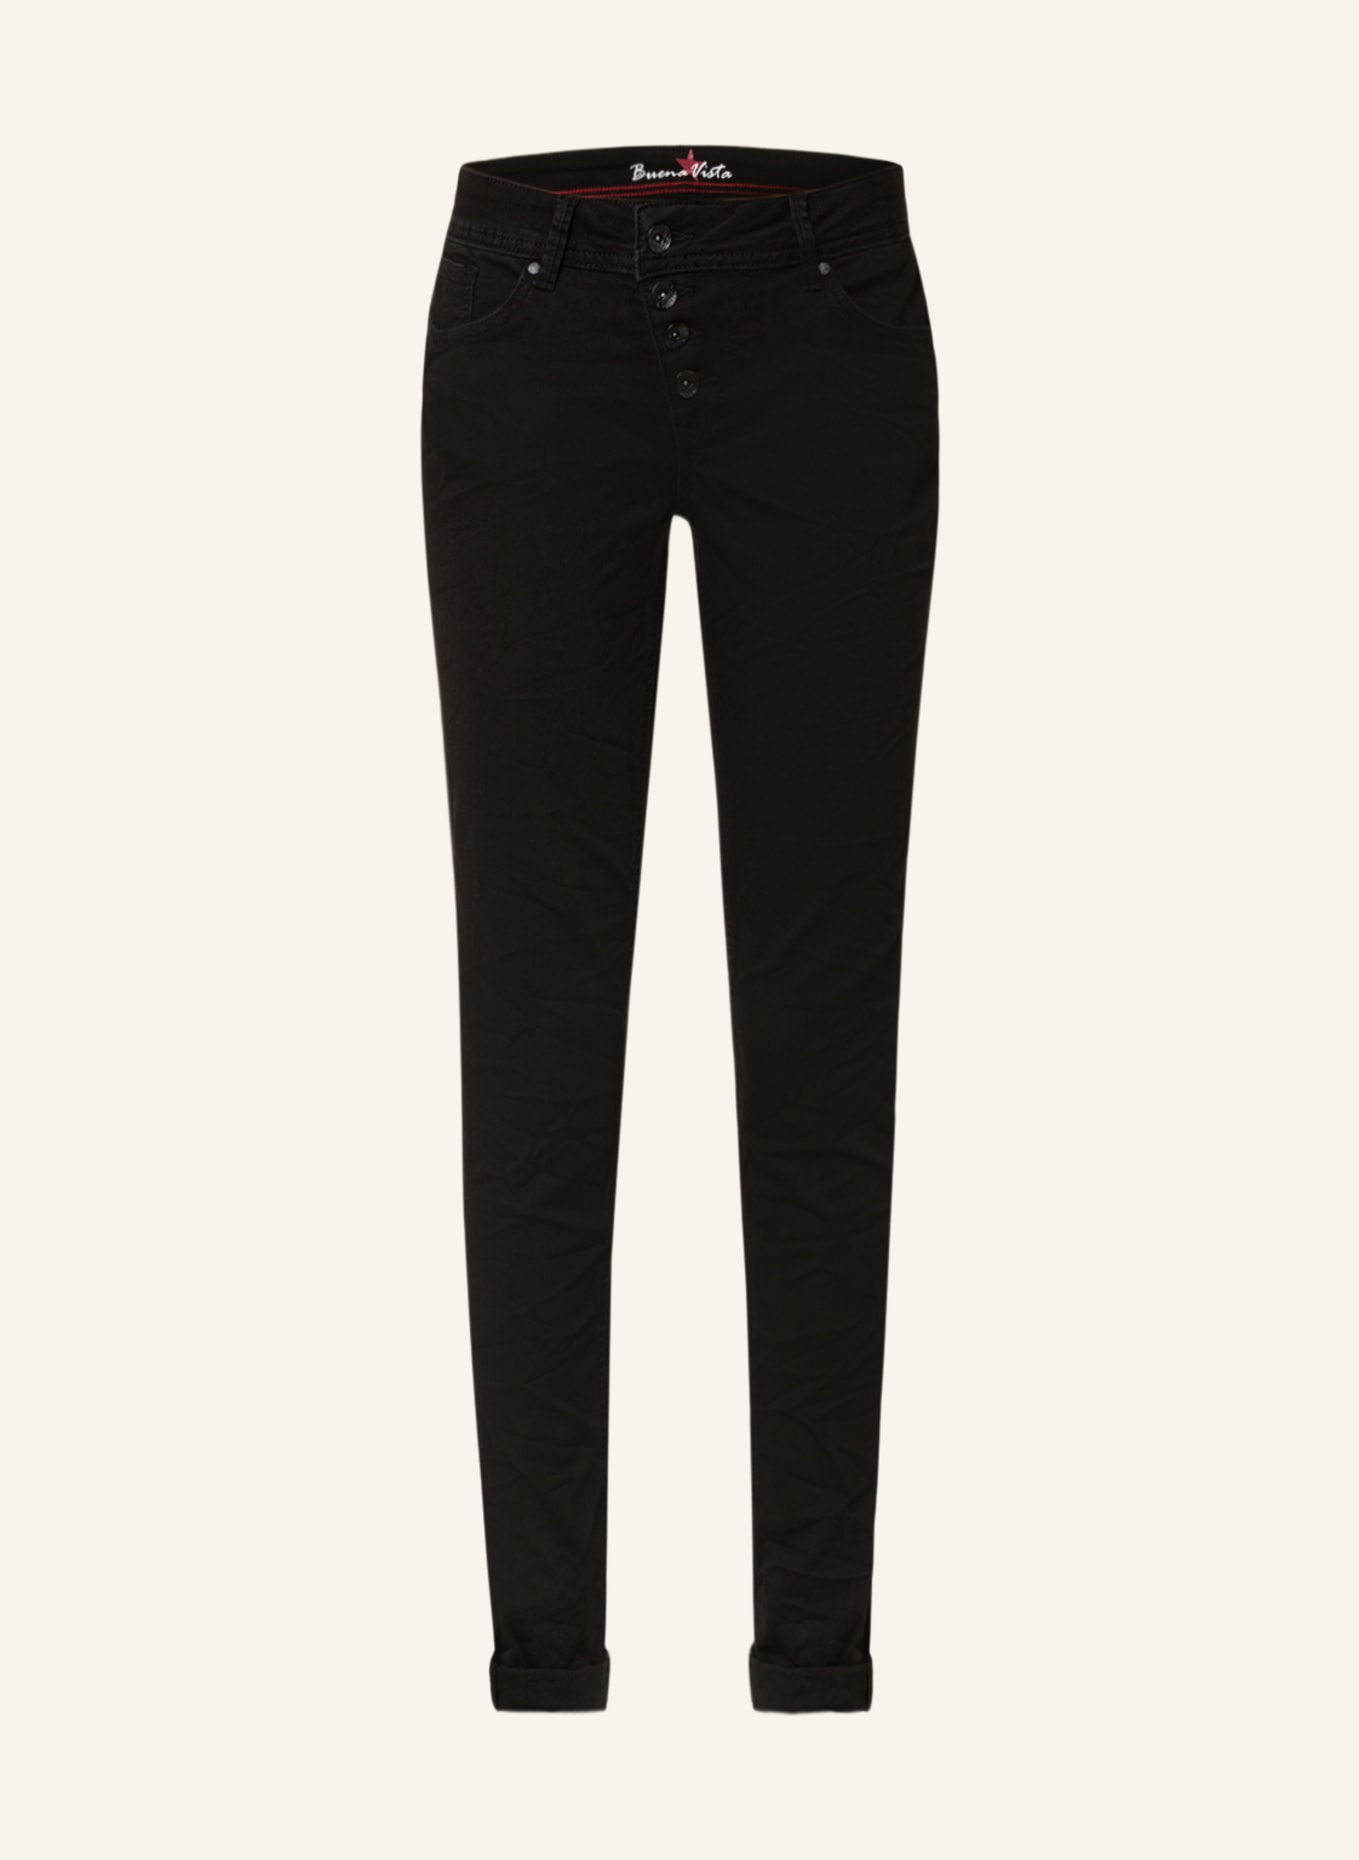 Buena Vista Jeans MALIBU, Farbe: 014  black (Bild 1)